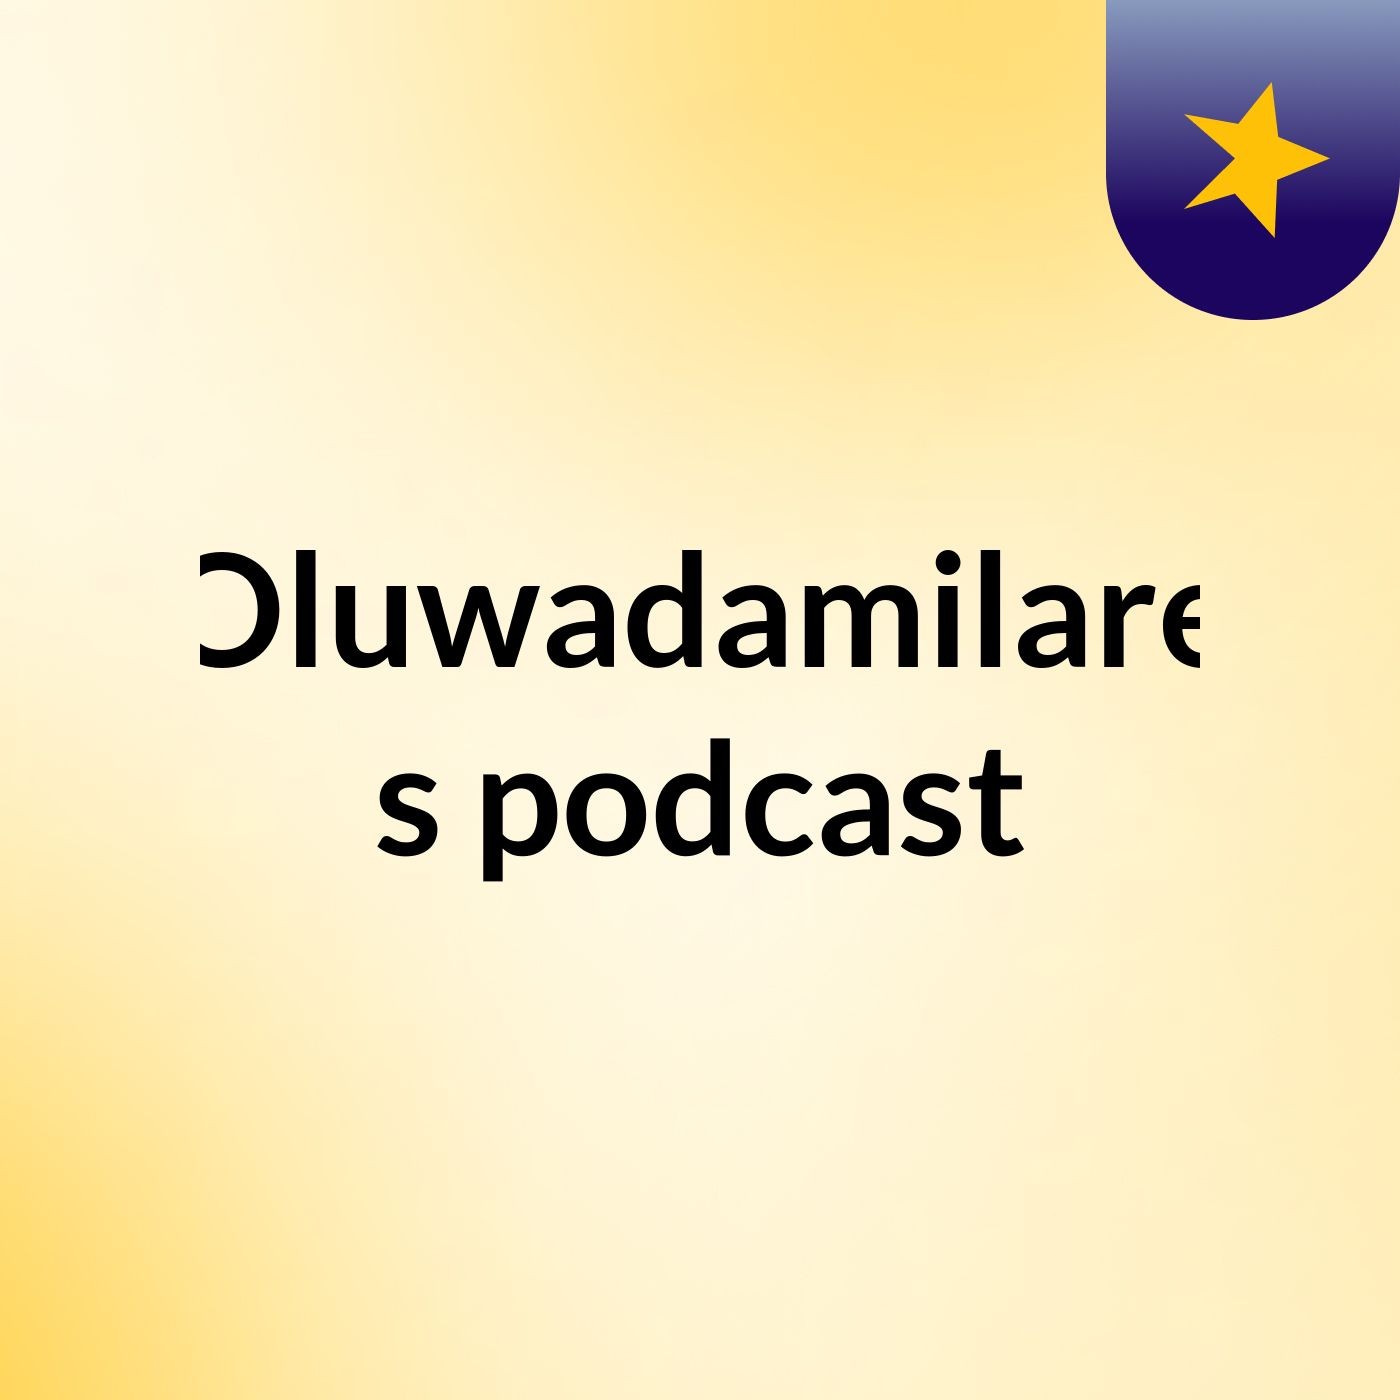 Oluwadamilare's podcast